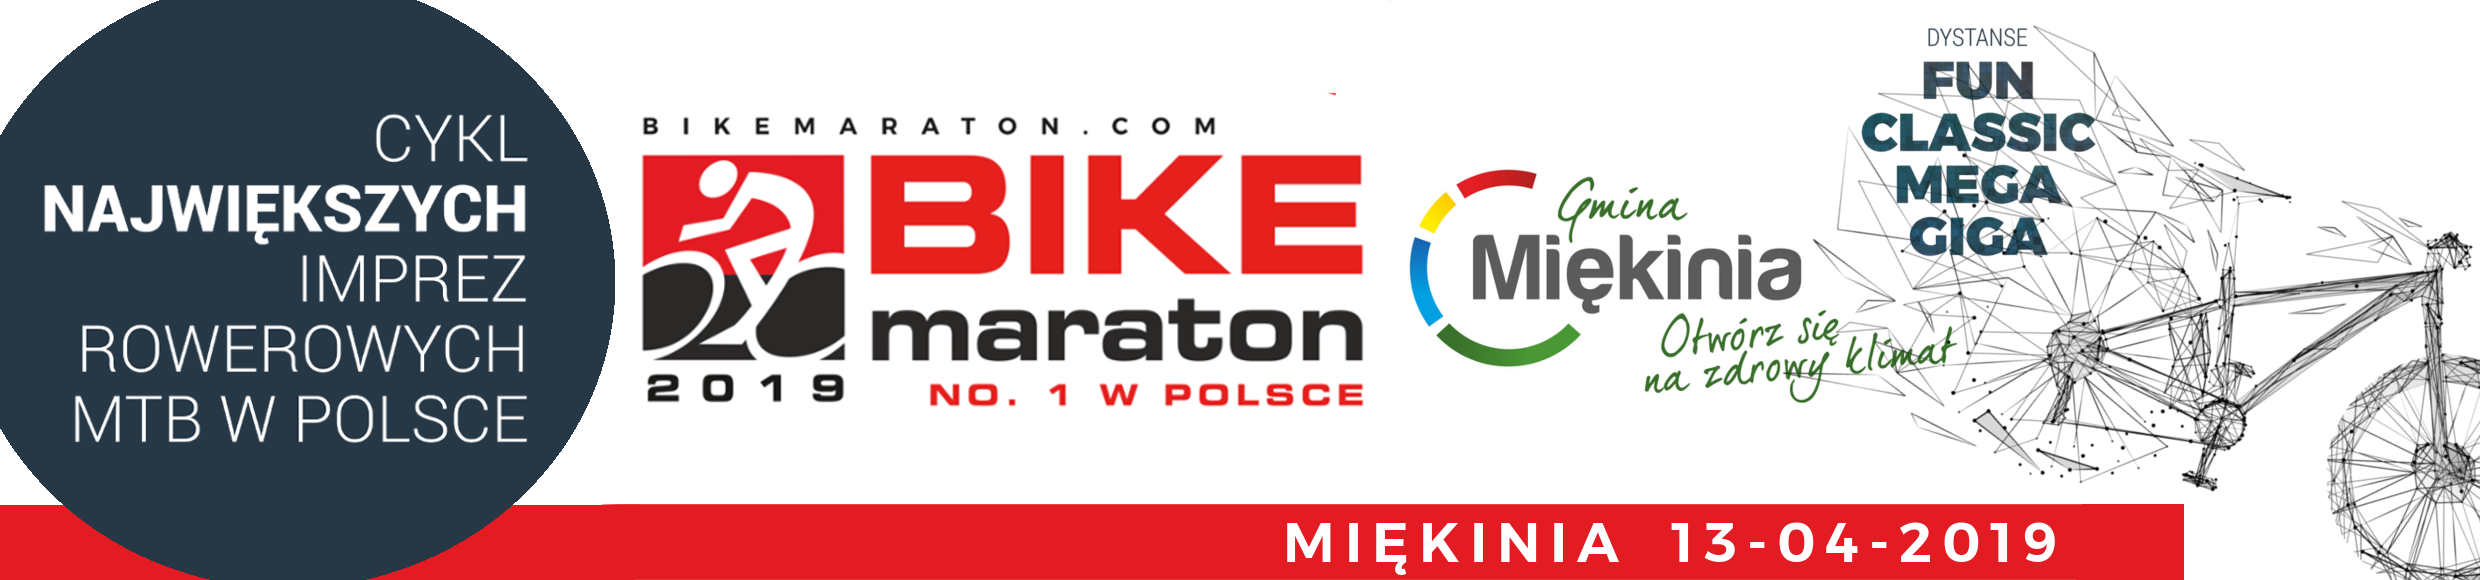 Bike Maraton Miekinia - start sezonu 2019